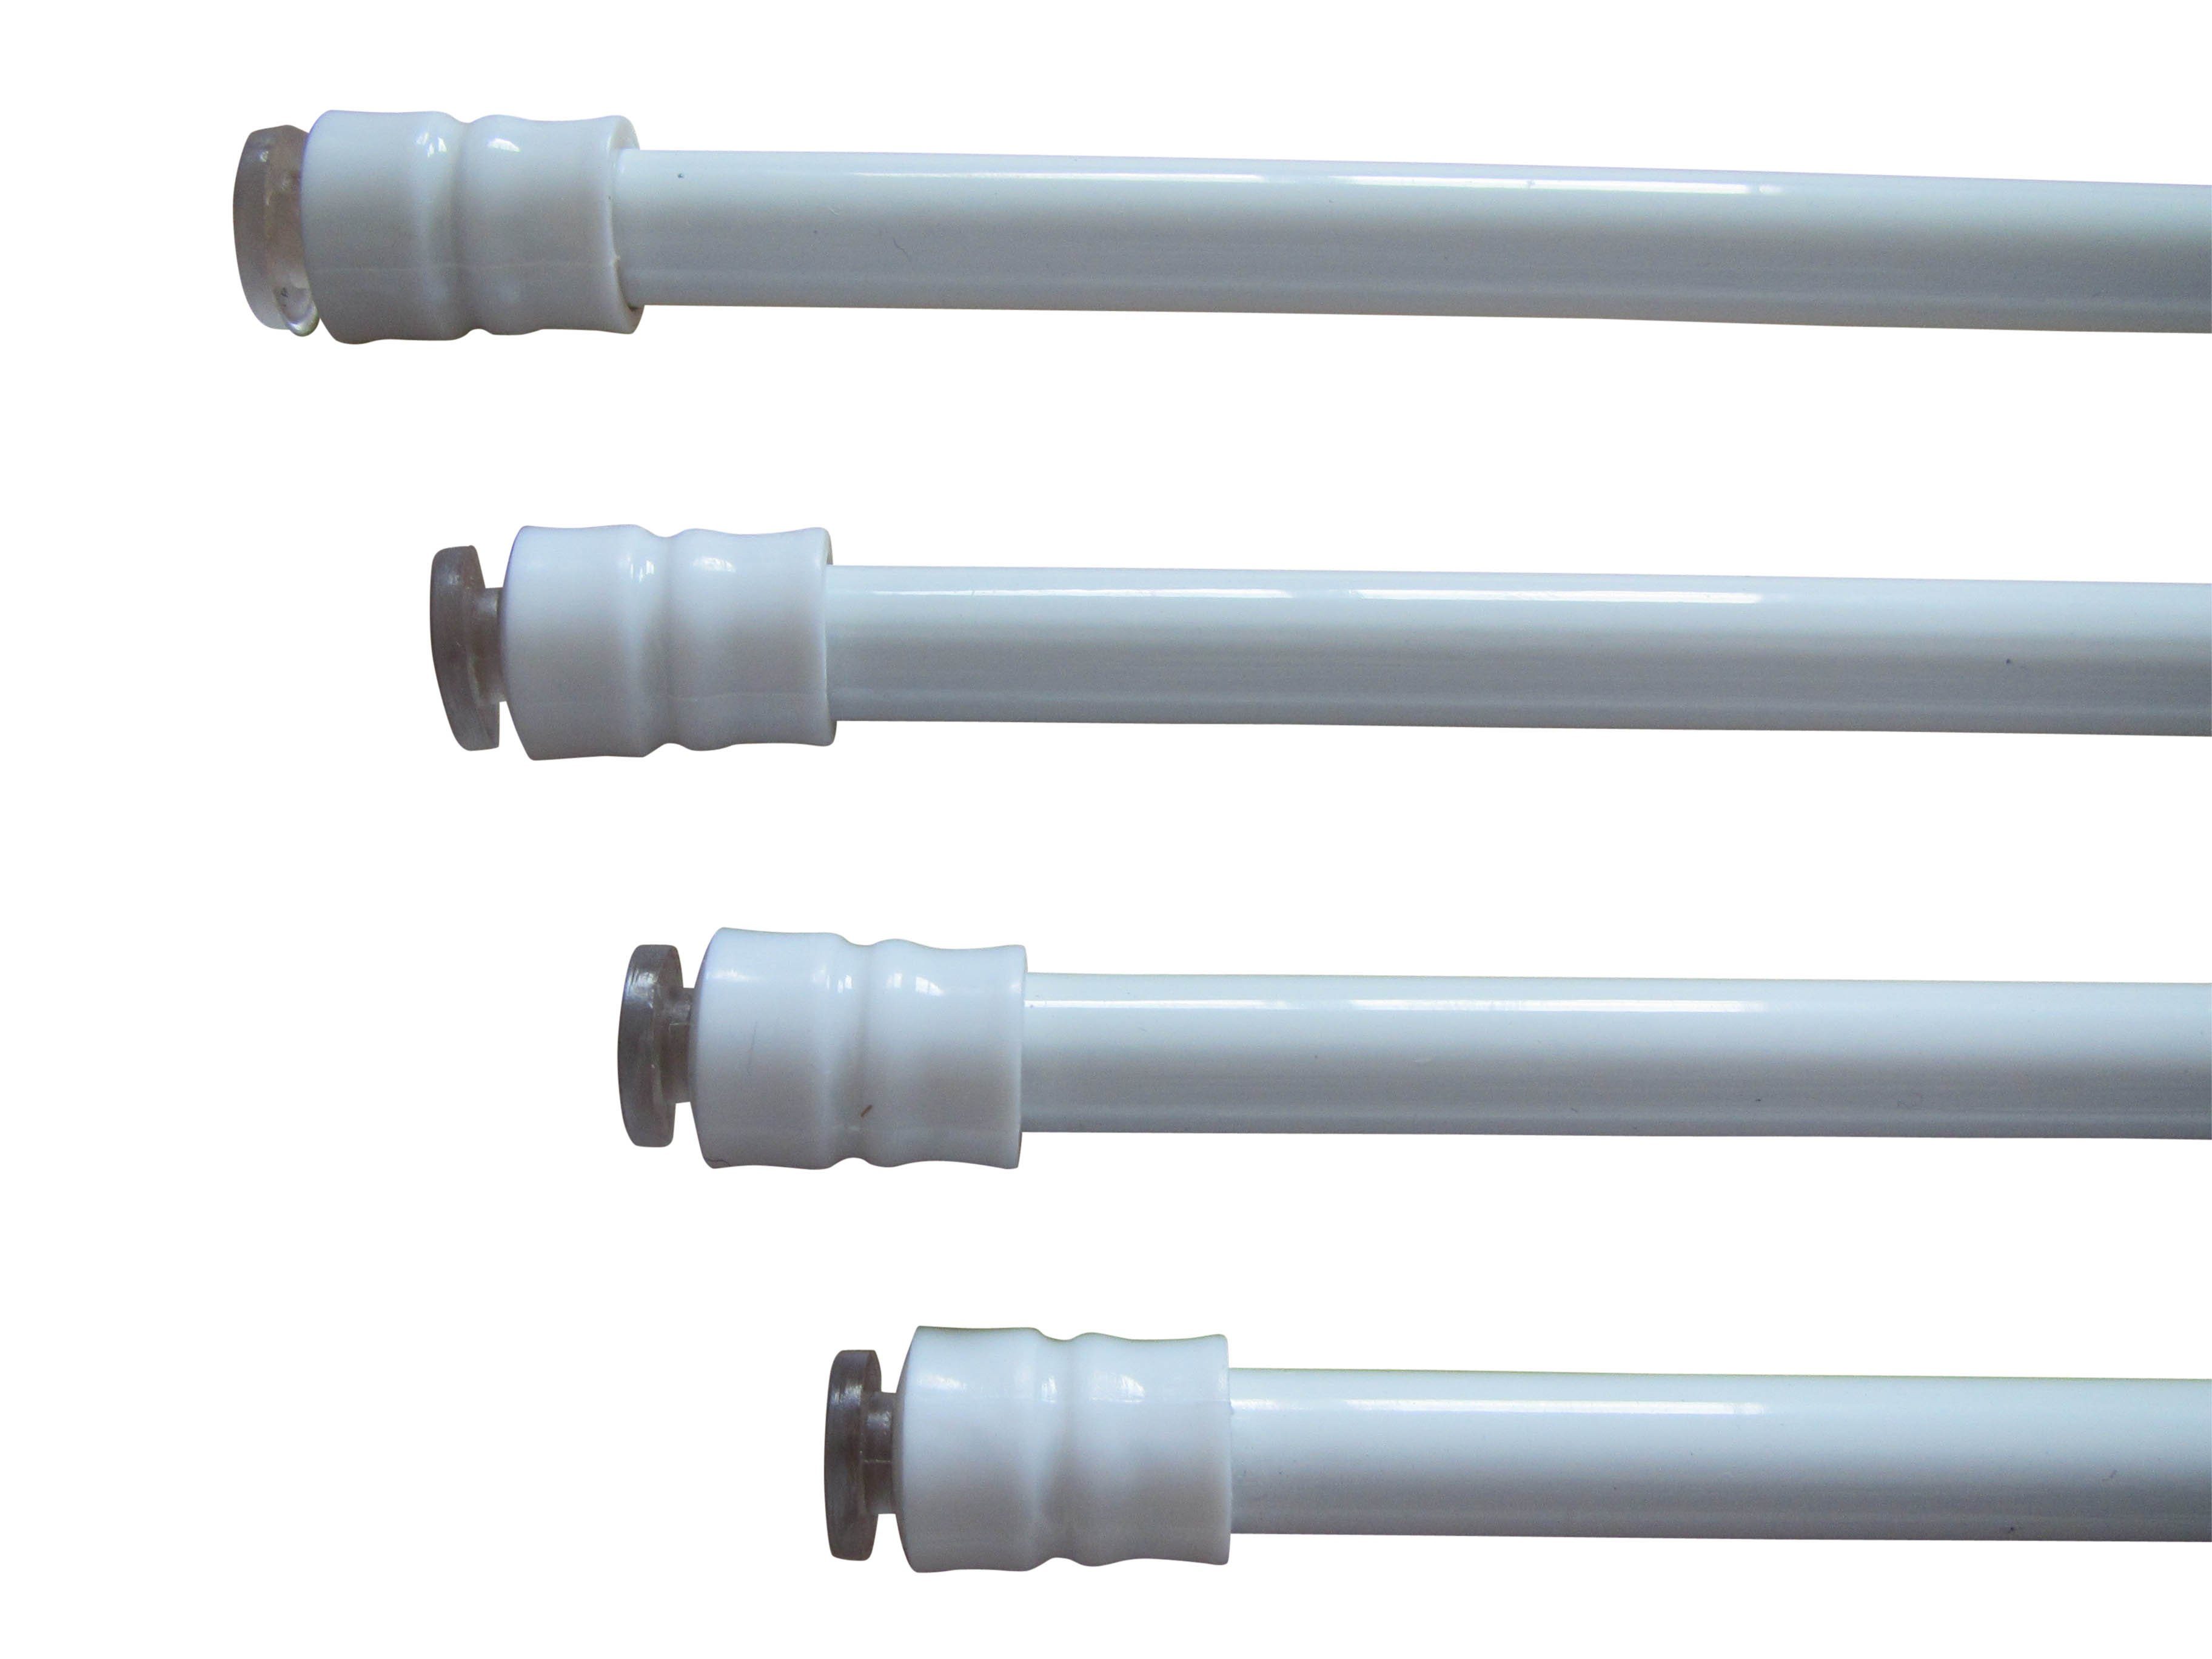 Klemmstange 4 Gardinenstangen – rewagi, Verkaufseinheit 4 geklemmt, Ø Farbe: 8mm, ausdrehbar, Stück weiß Klemmstangen